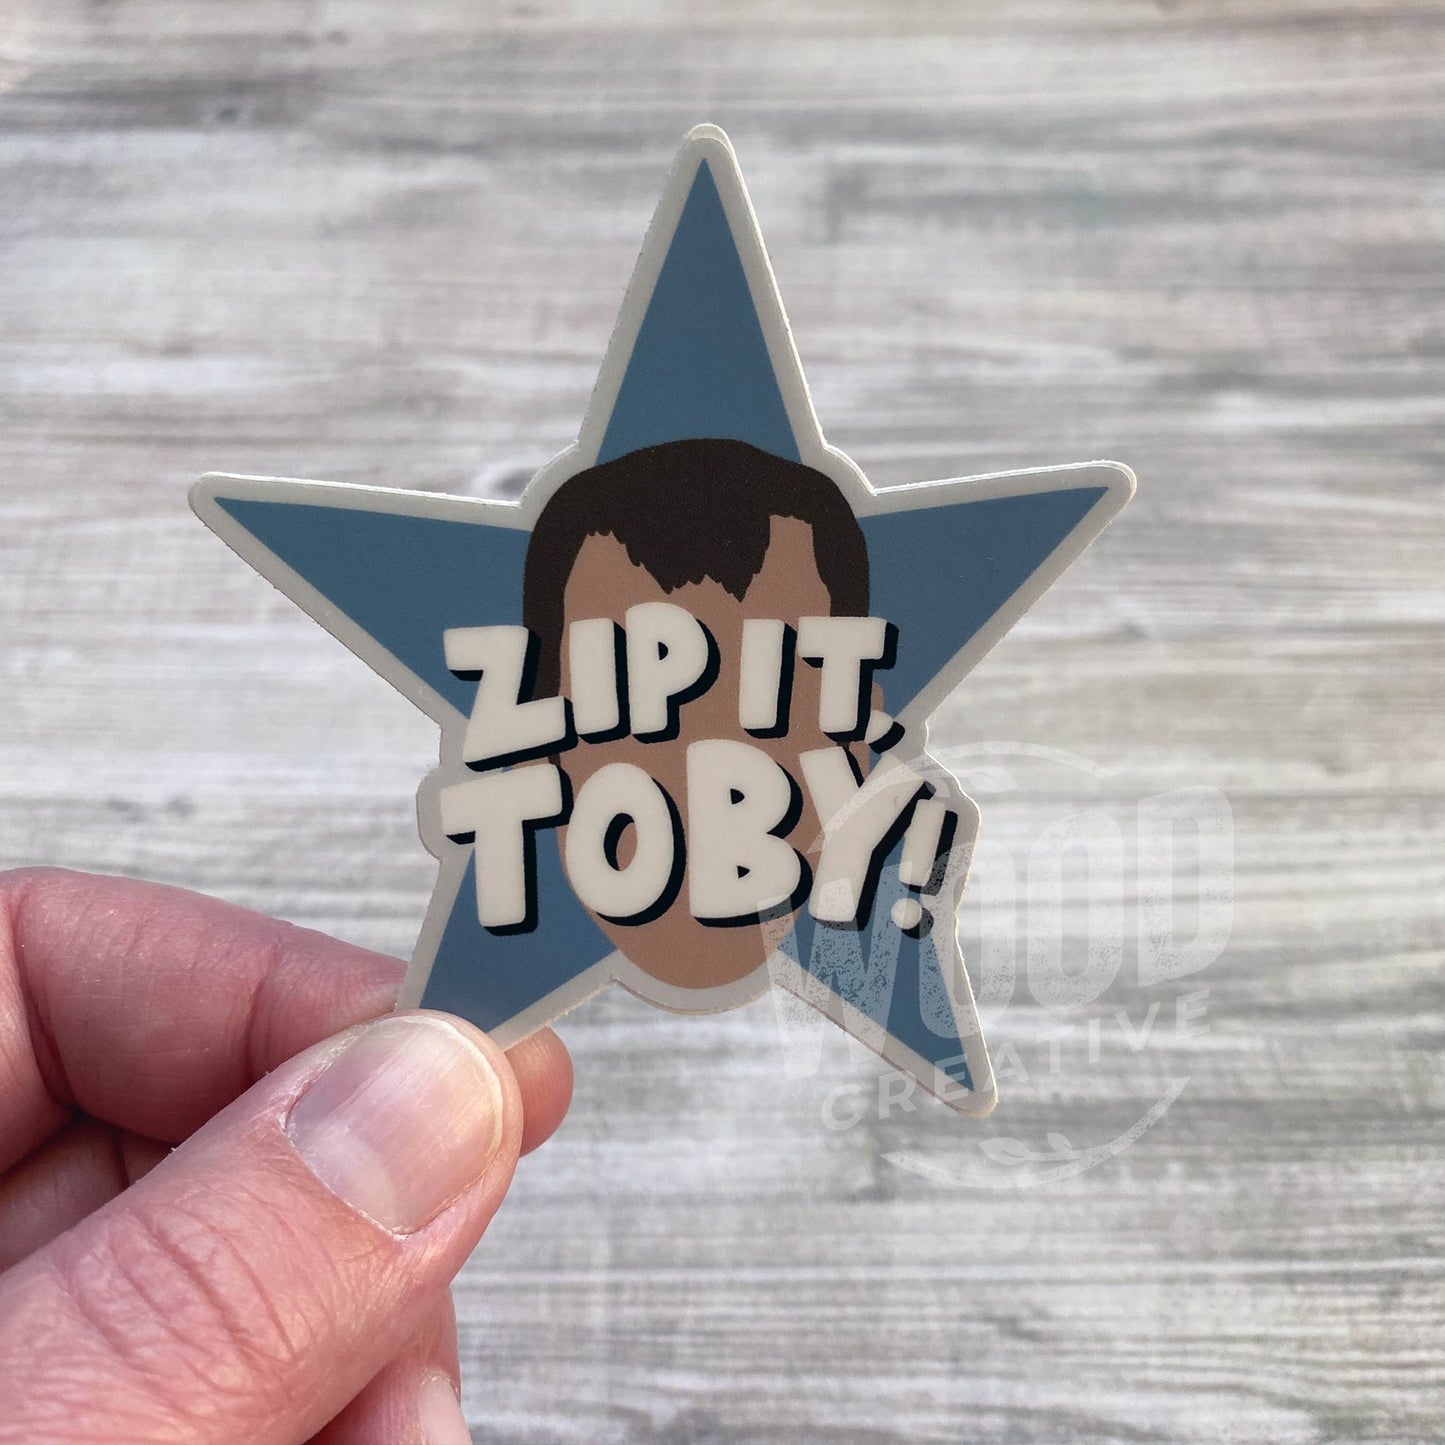 Zip It Toby! High Quality Vinyl Sticker